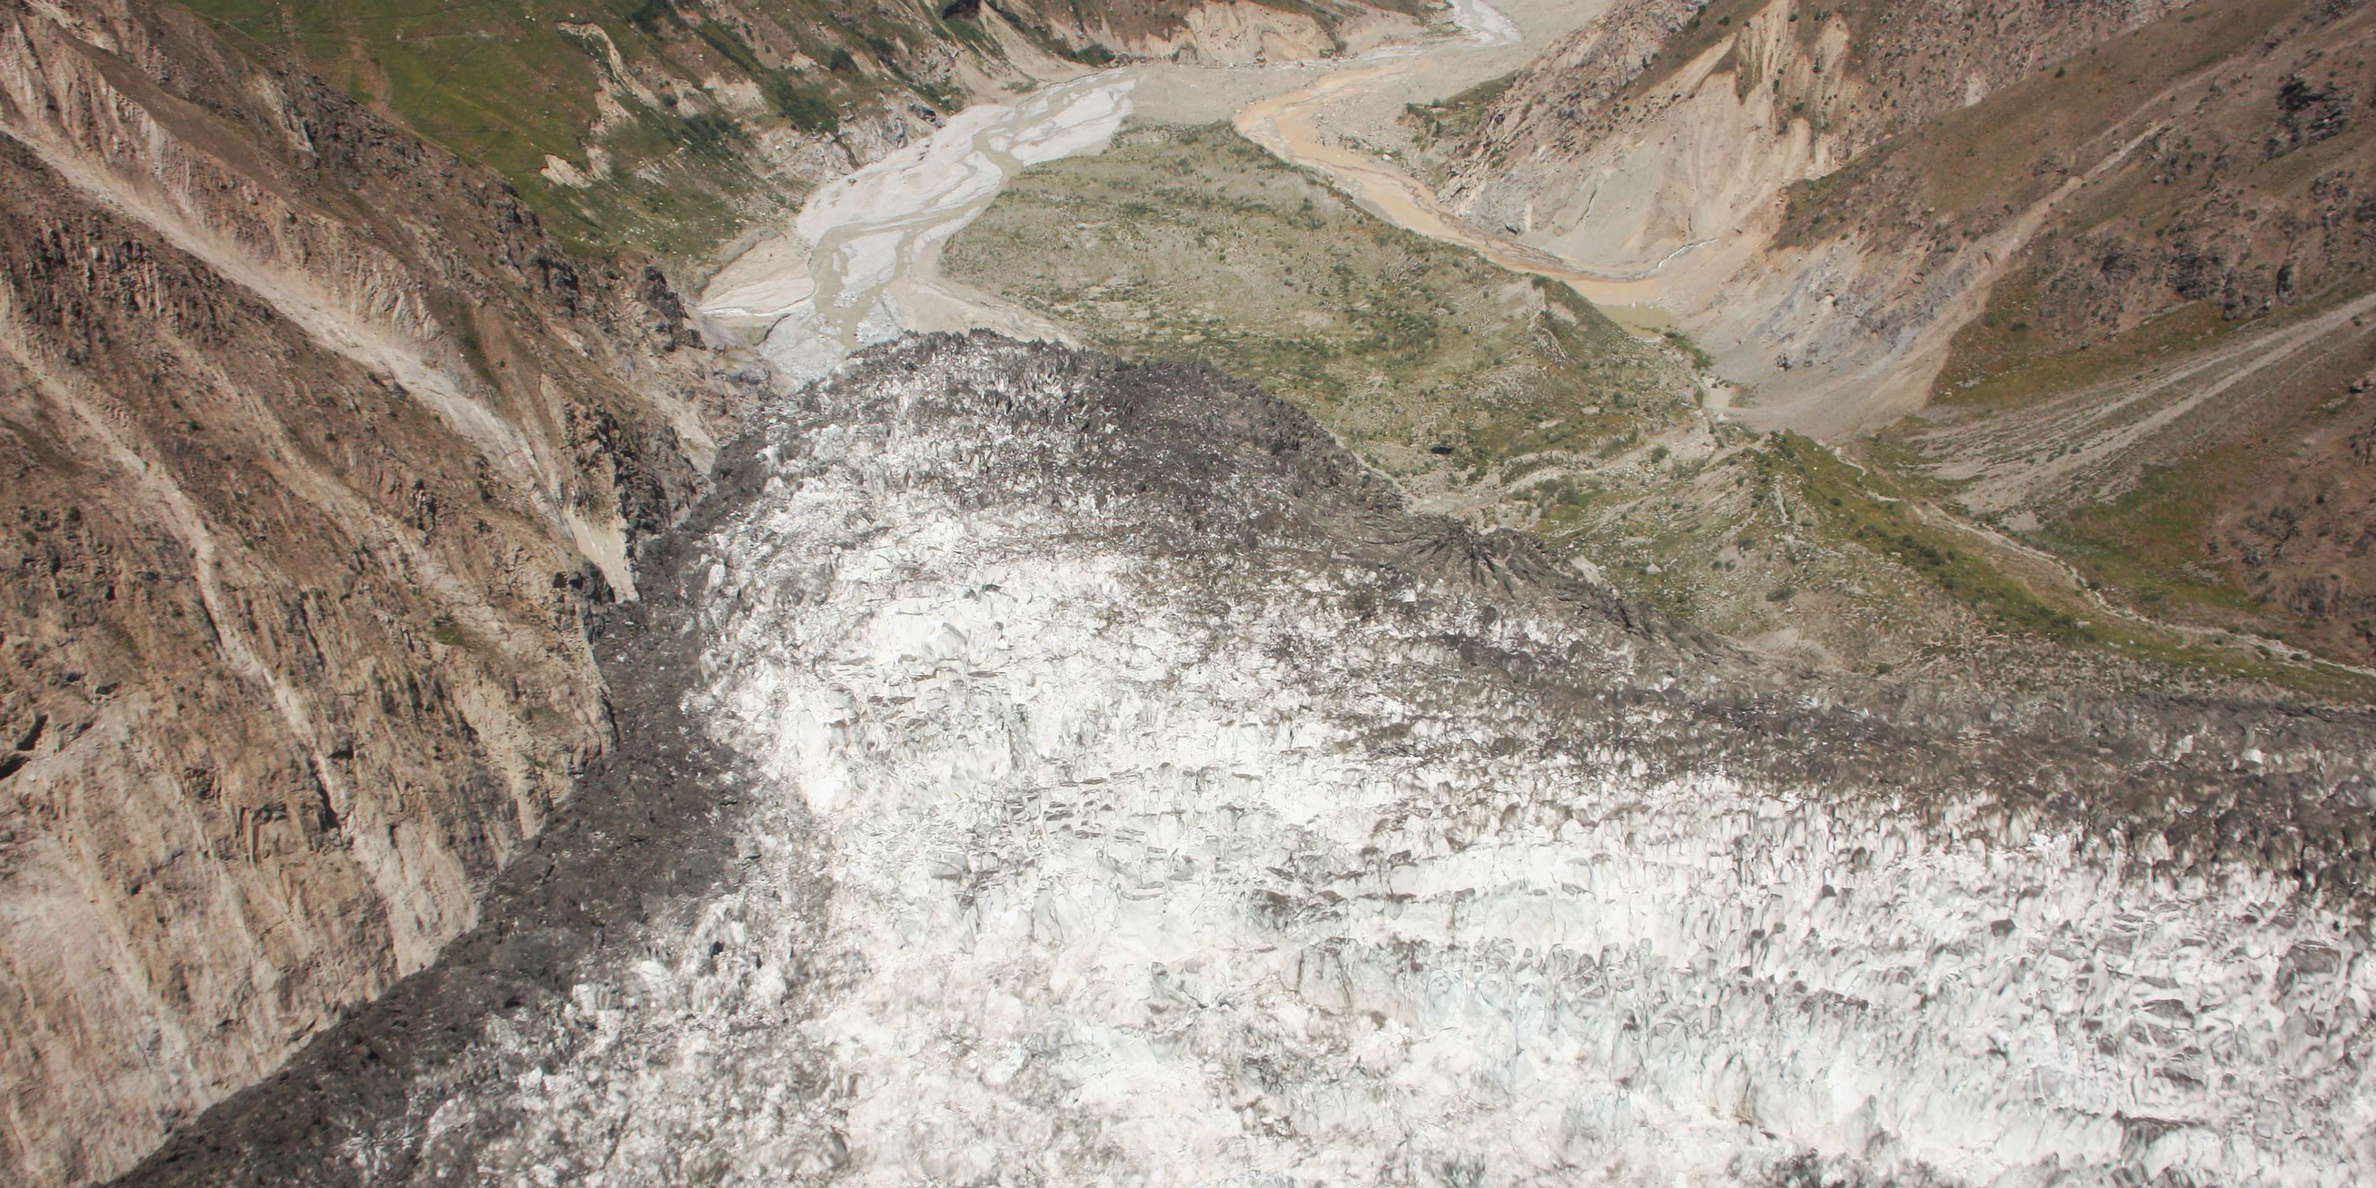 Vanj Valley  |  Surging tongue of Medvezhiy Glacier